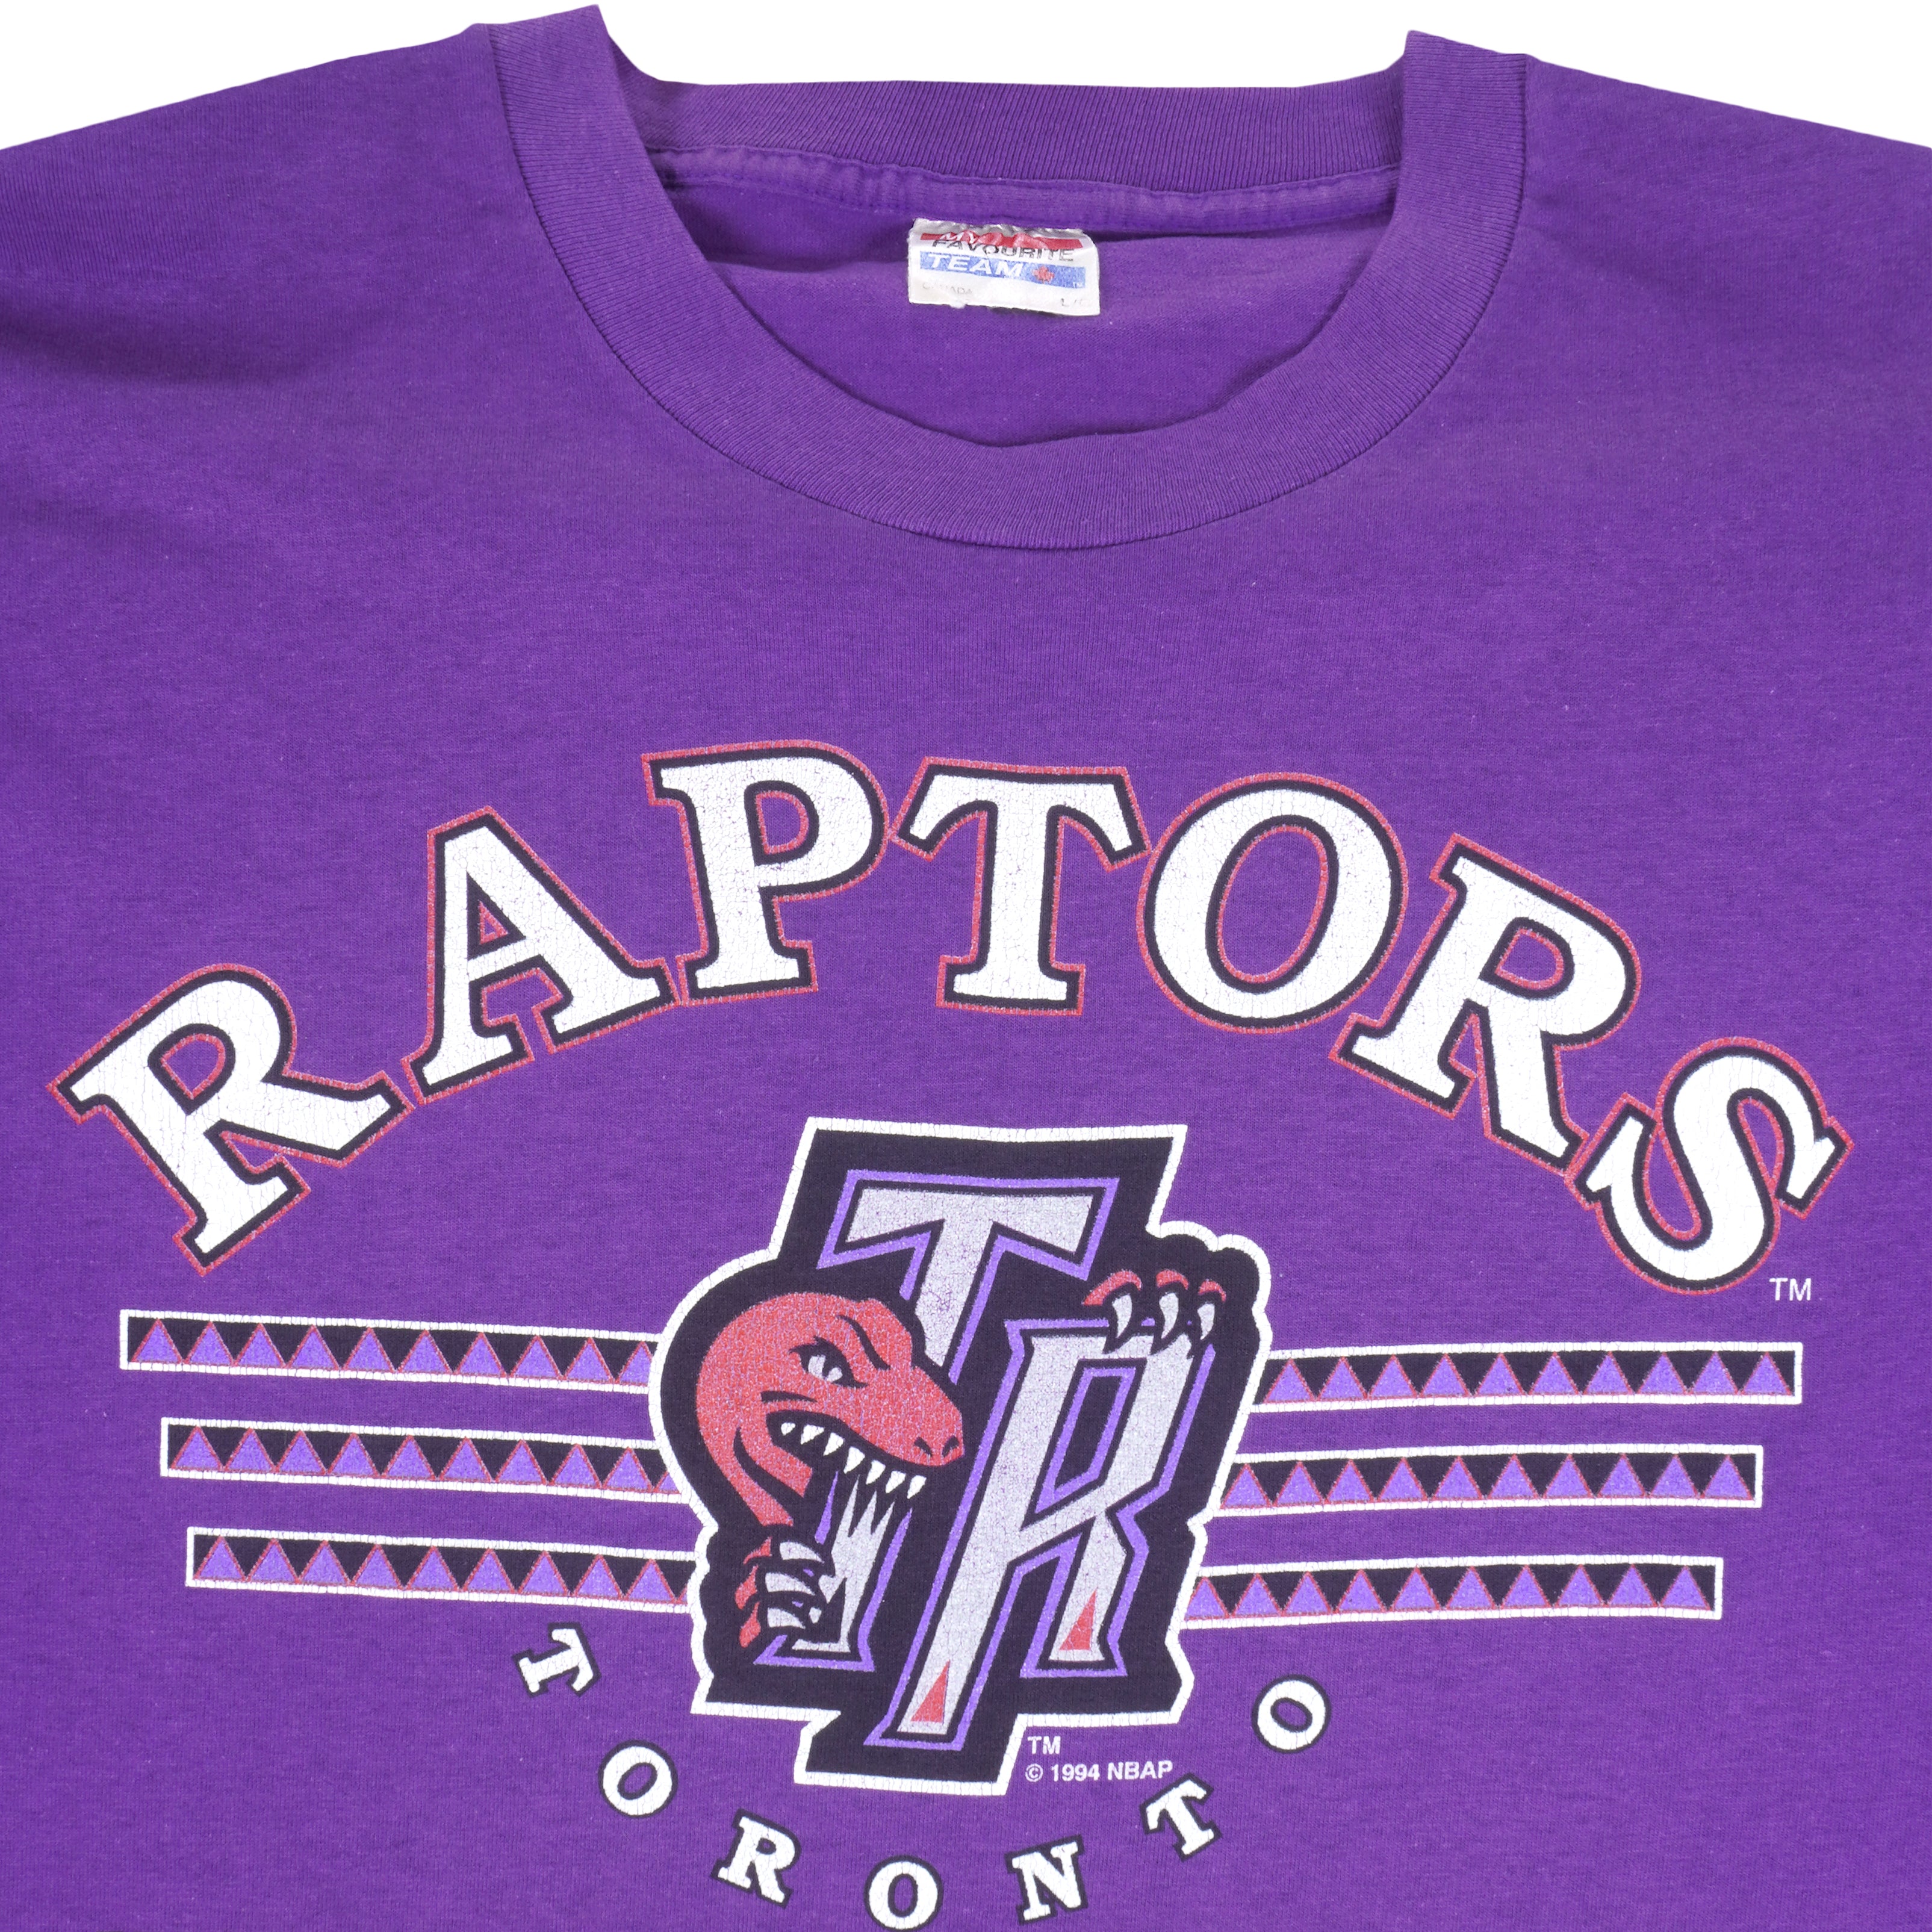 Vintage 90s Toronto Raptors Crewneck Sweatshirt Big Logo Spell 